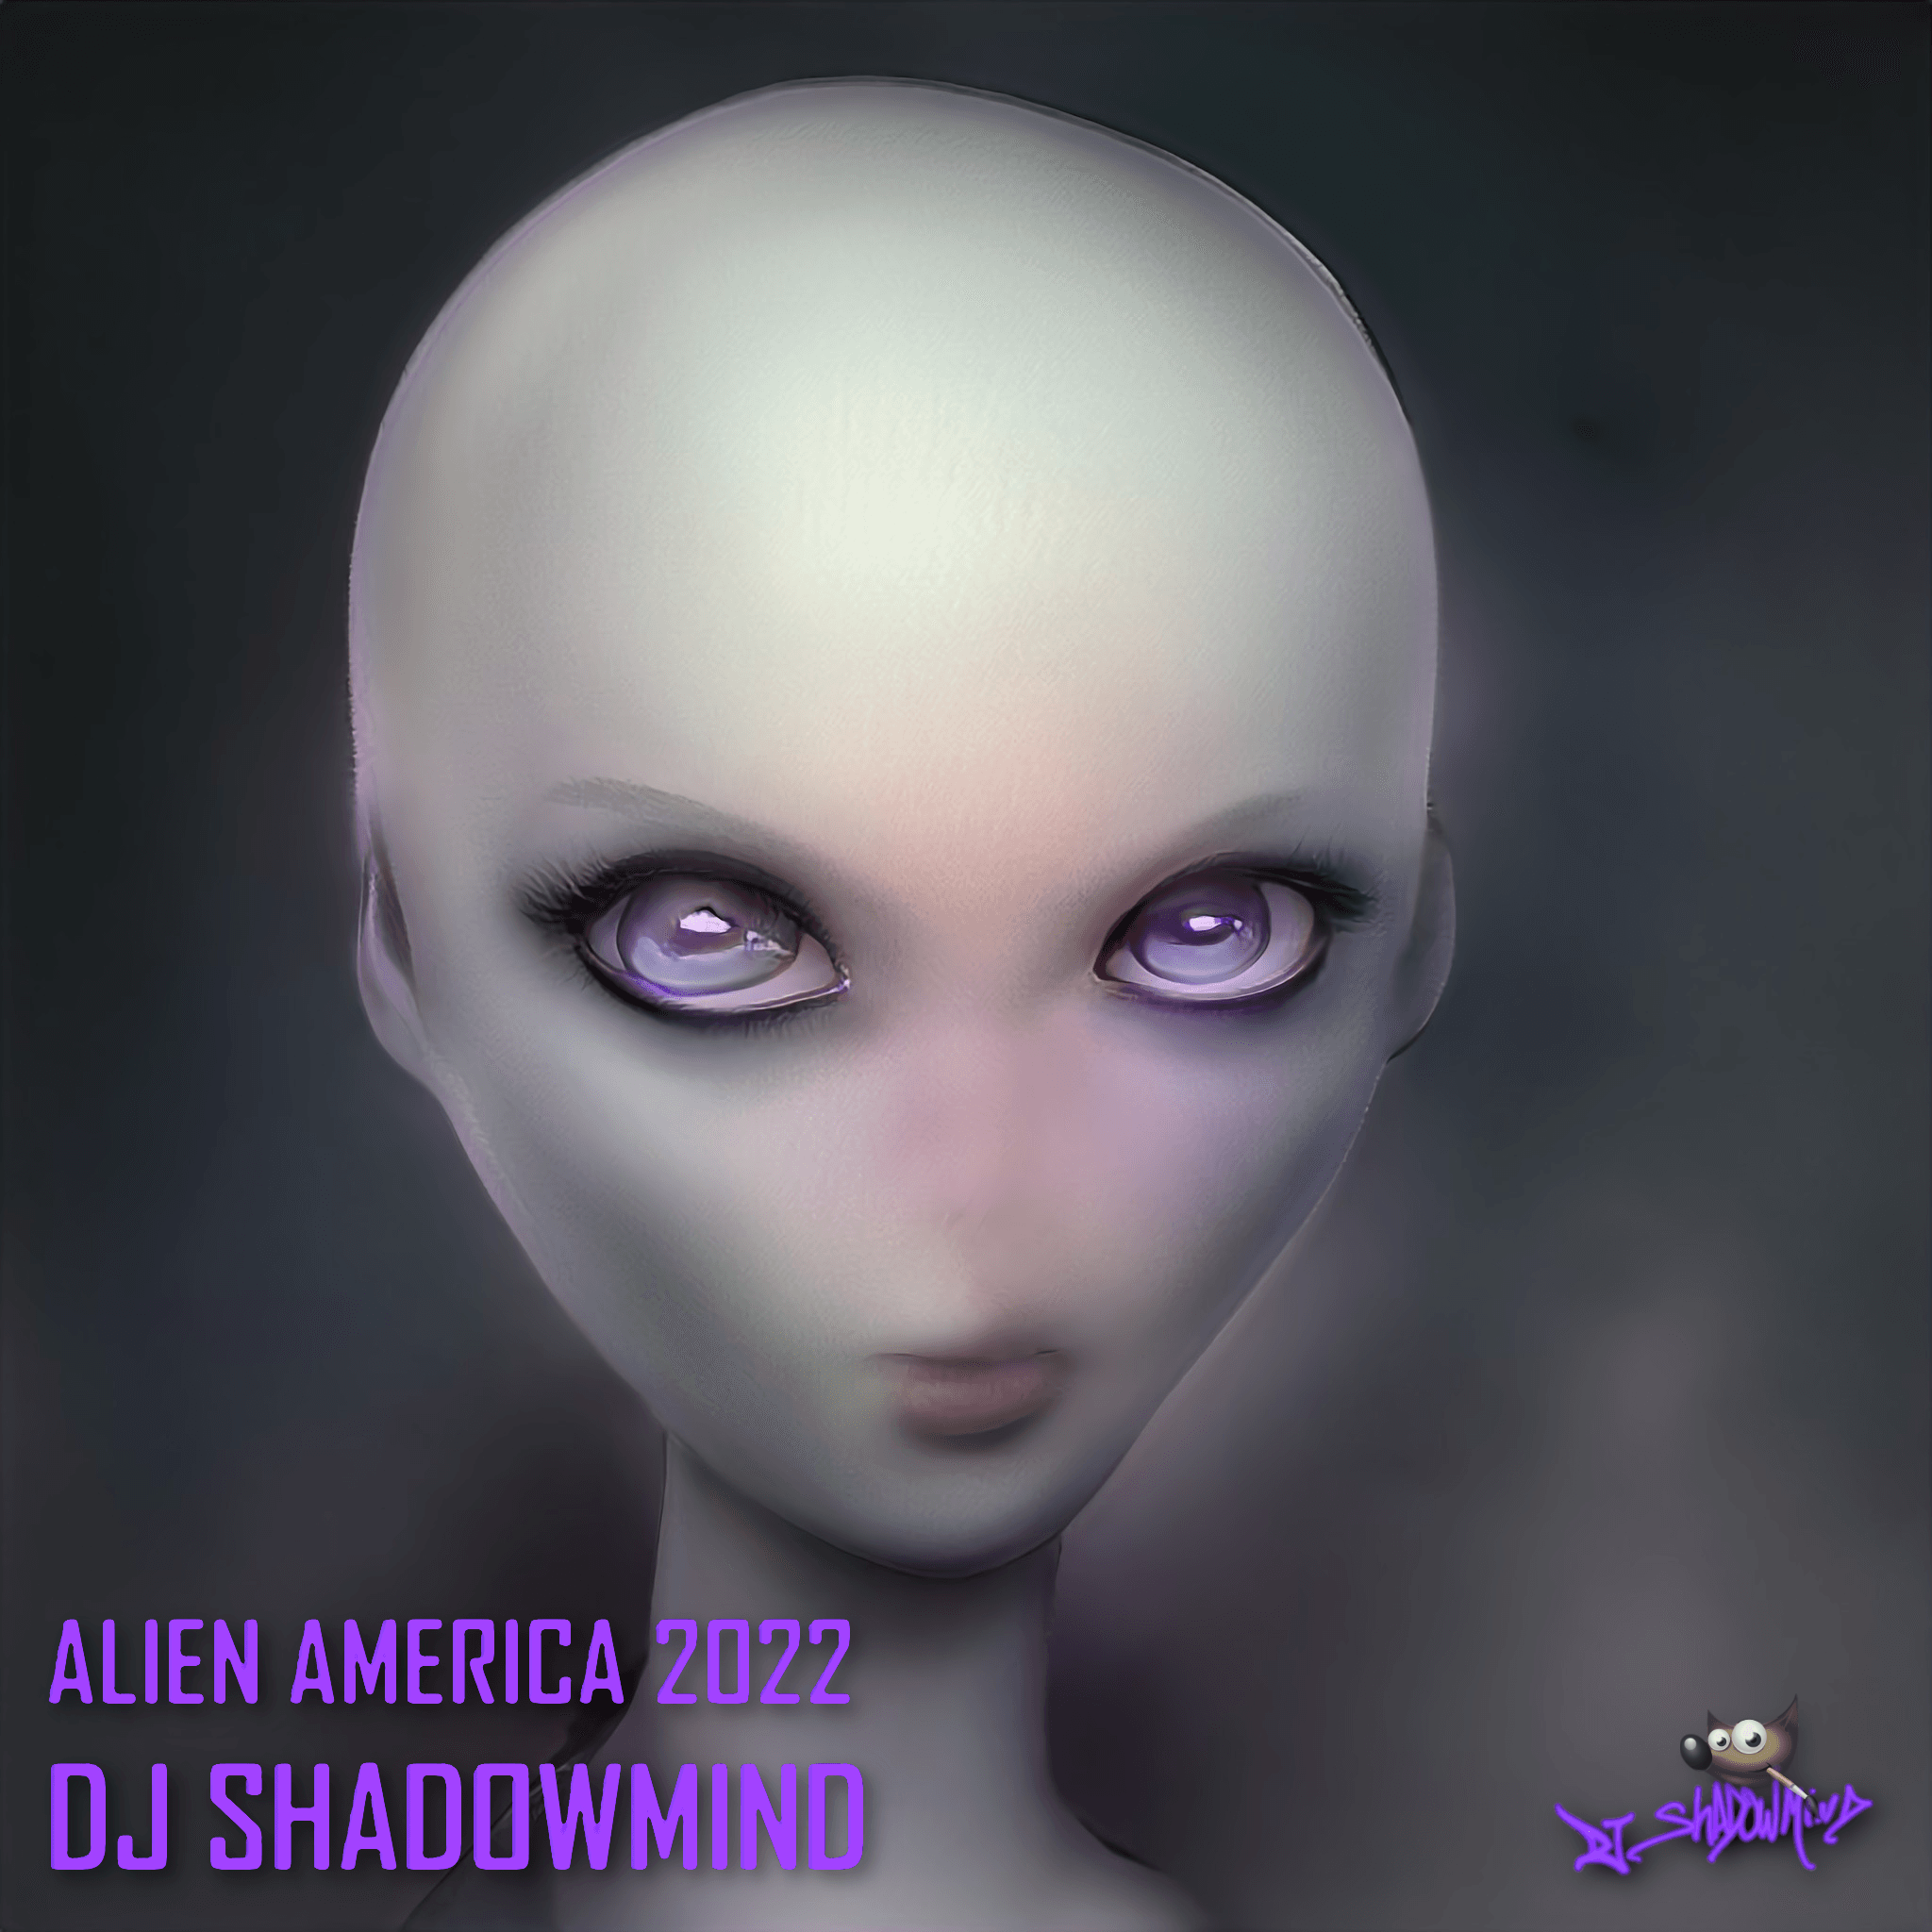 Alien America 2022 - Agent 068